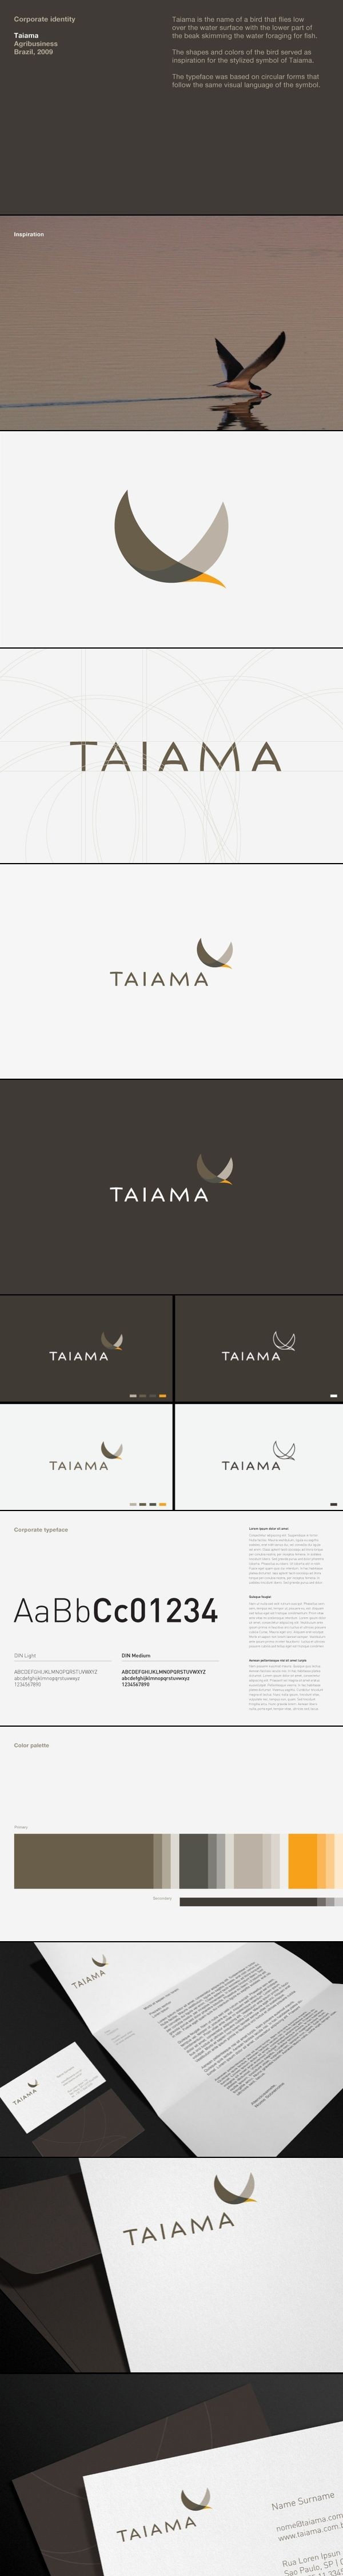 Taiama Logo Design by Roger Oddone of SF, CA. Eleg...